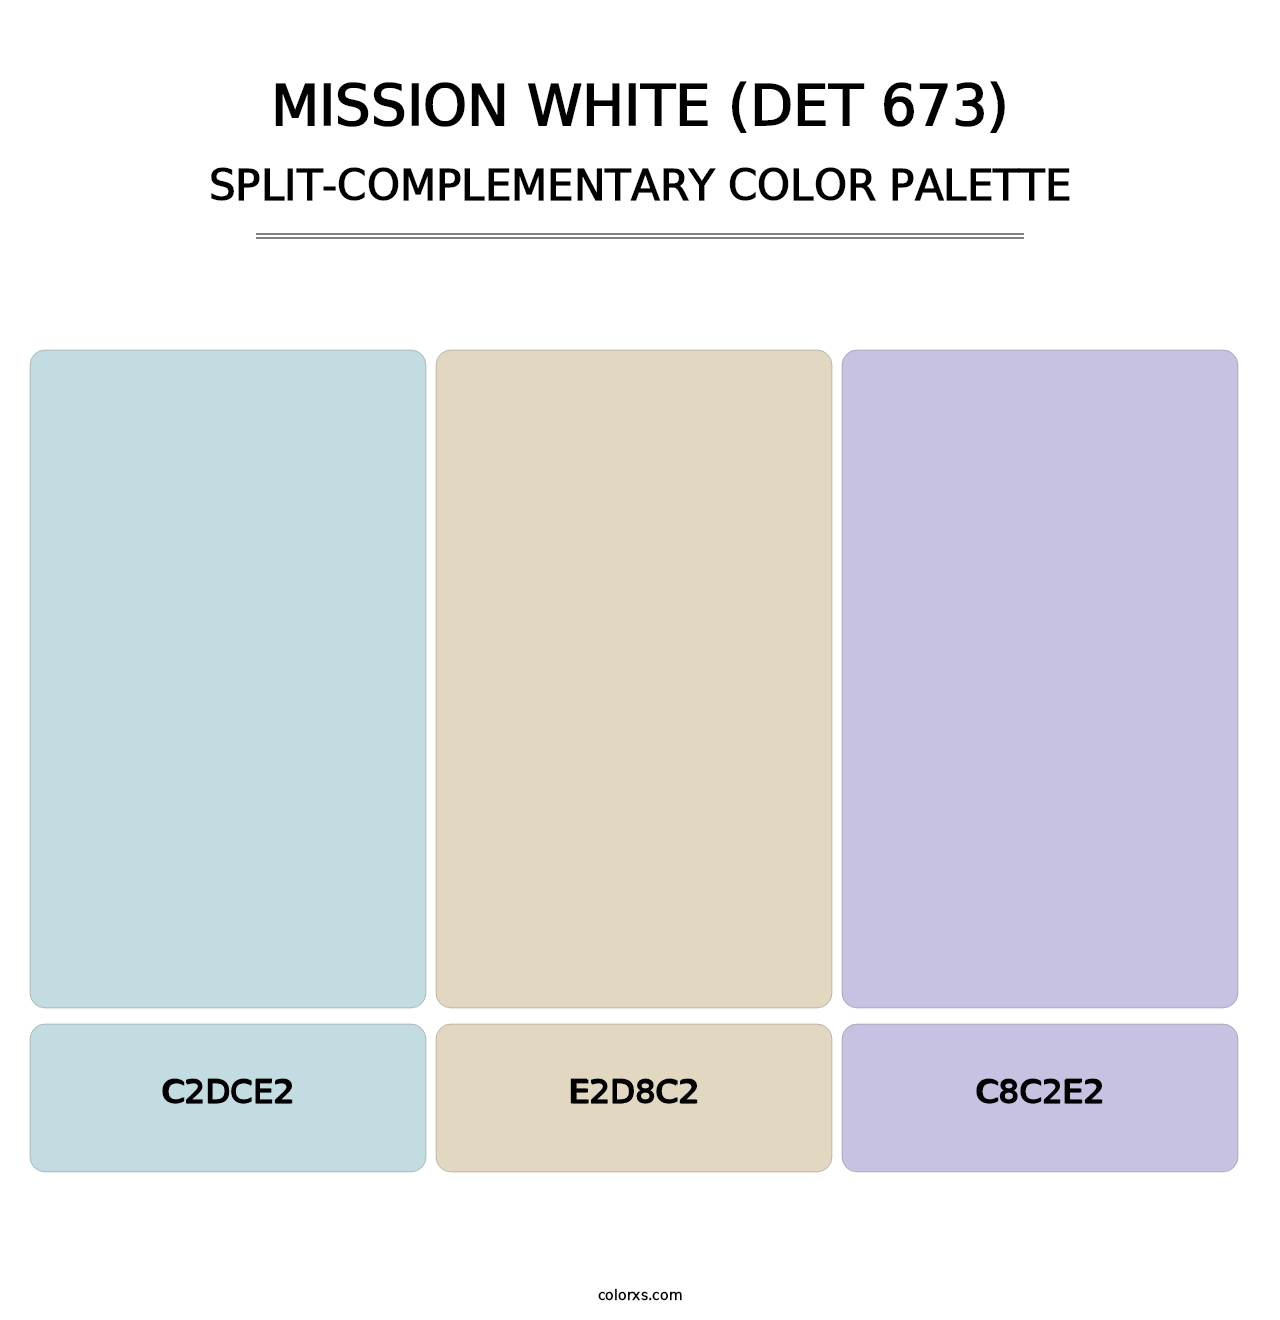 Mission White (DET 673) - Split-Complementary Color Palette